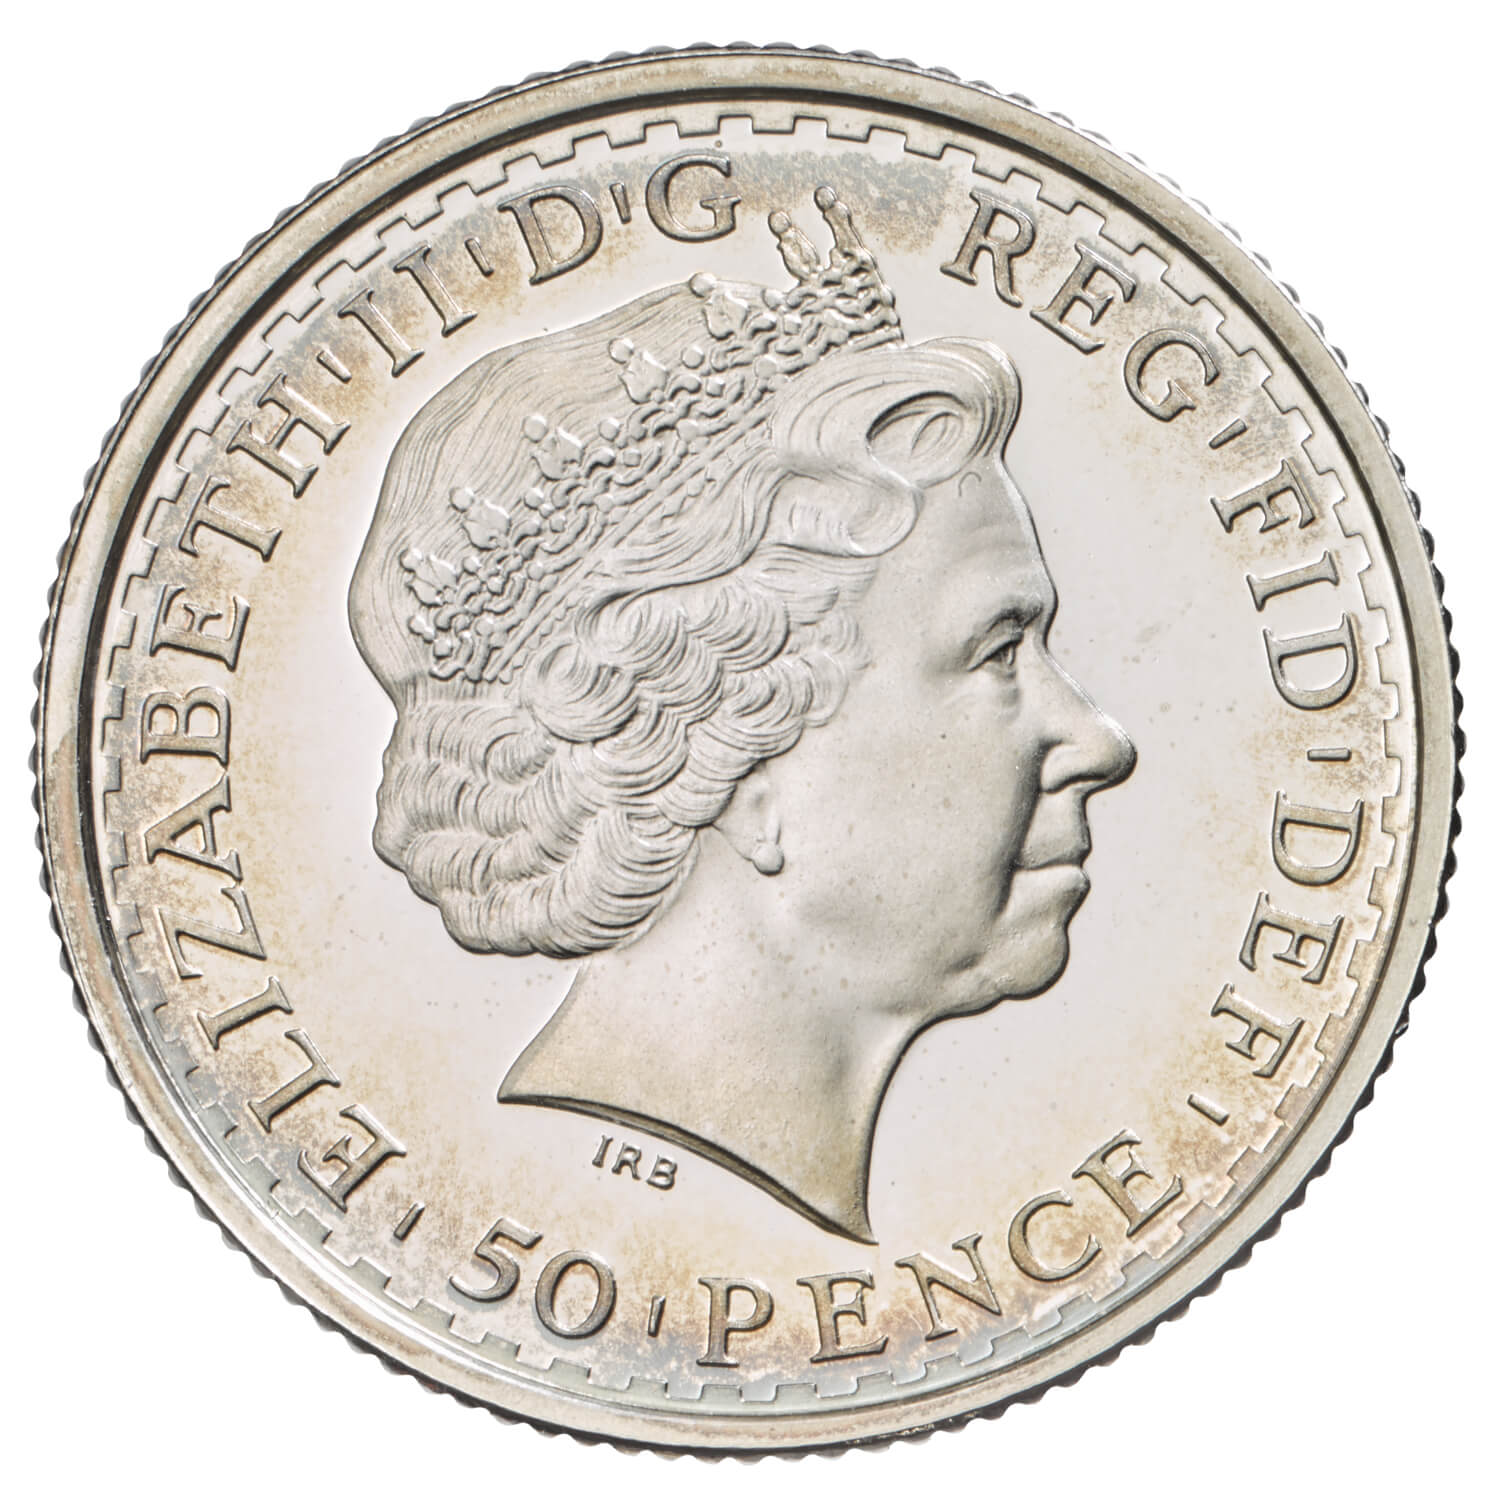 2001 Britannia Silver Proof Set | The Royal Mint